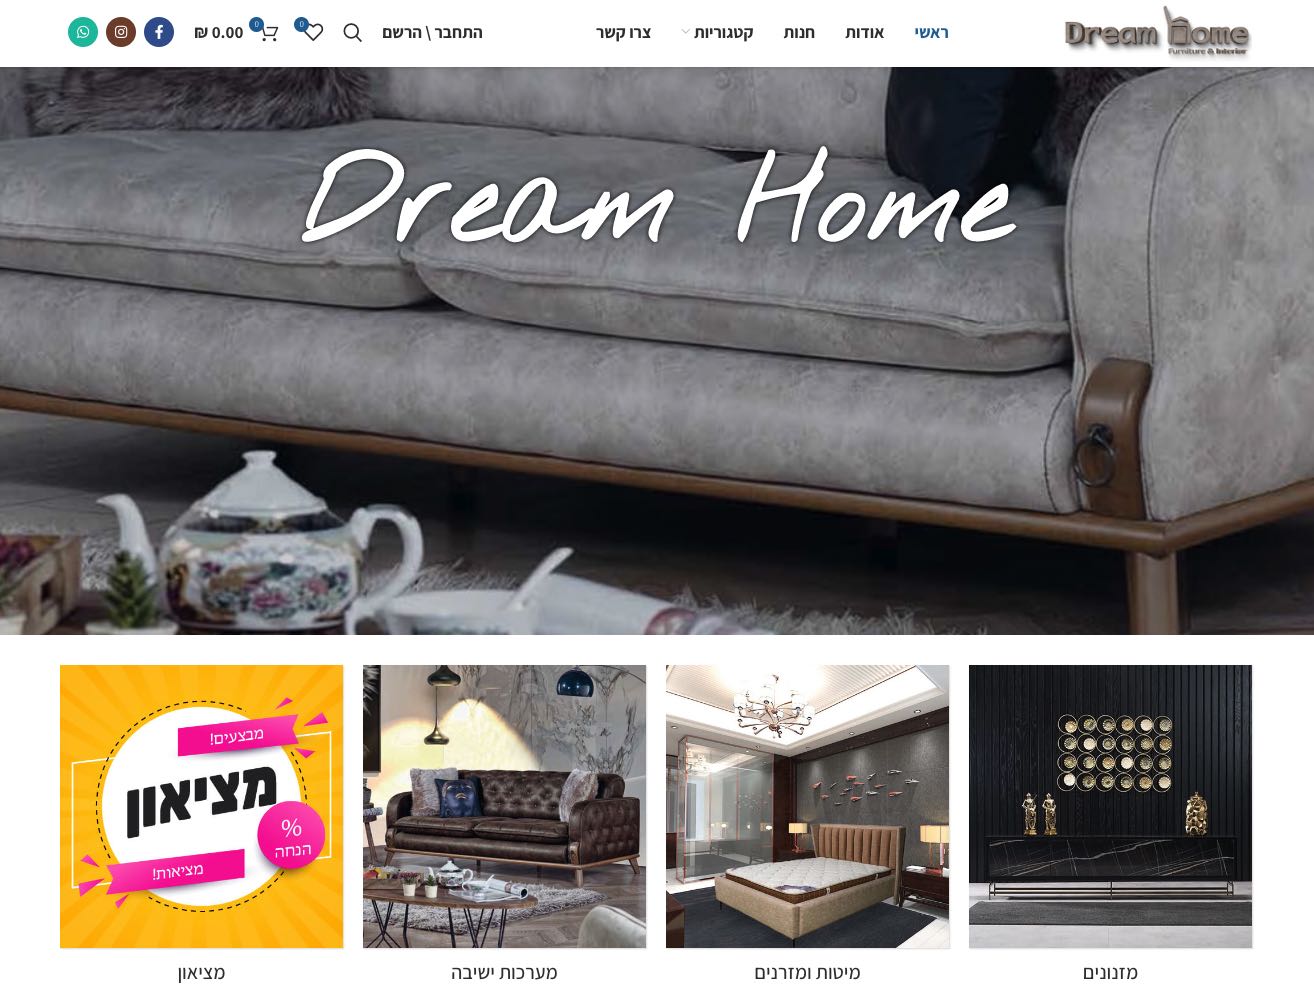 Dream Home Furniture Store Homepage